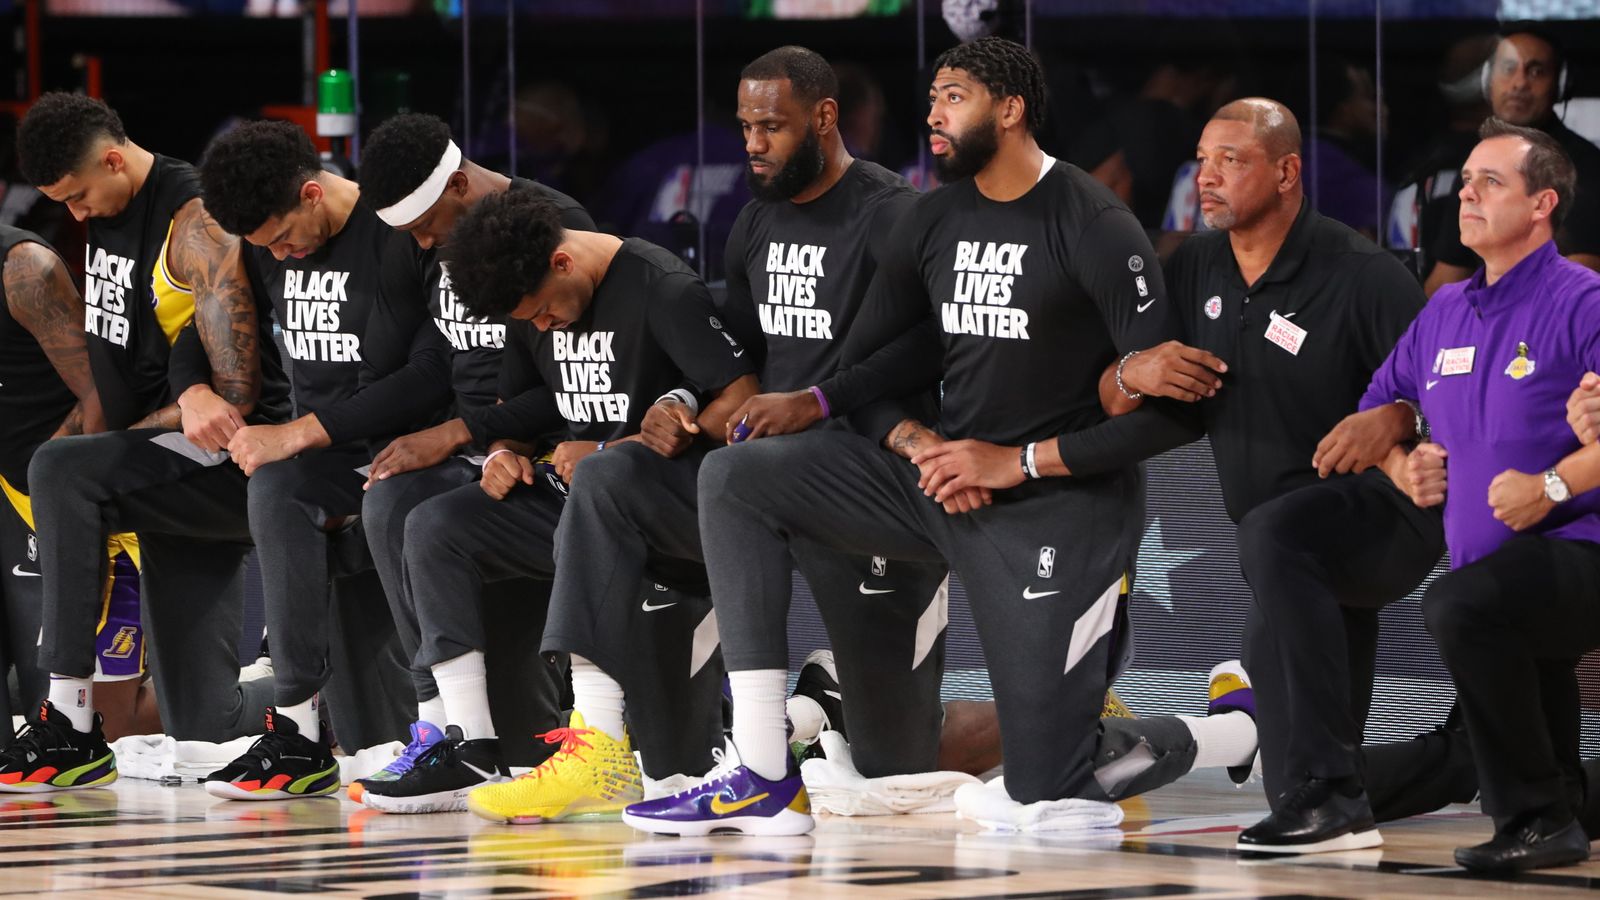 NBA Players Kneel During Anthem In Black Lives Matter Protest At